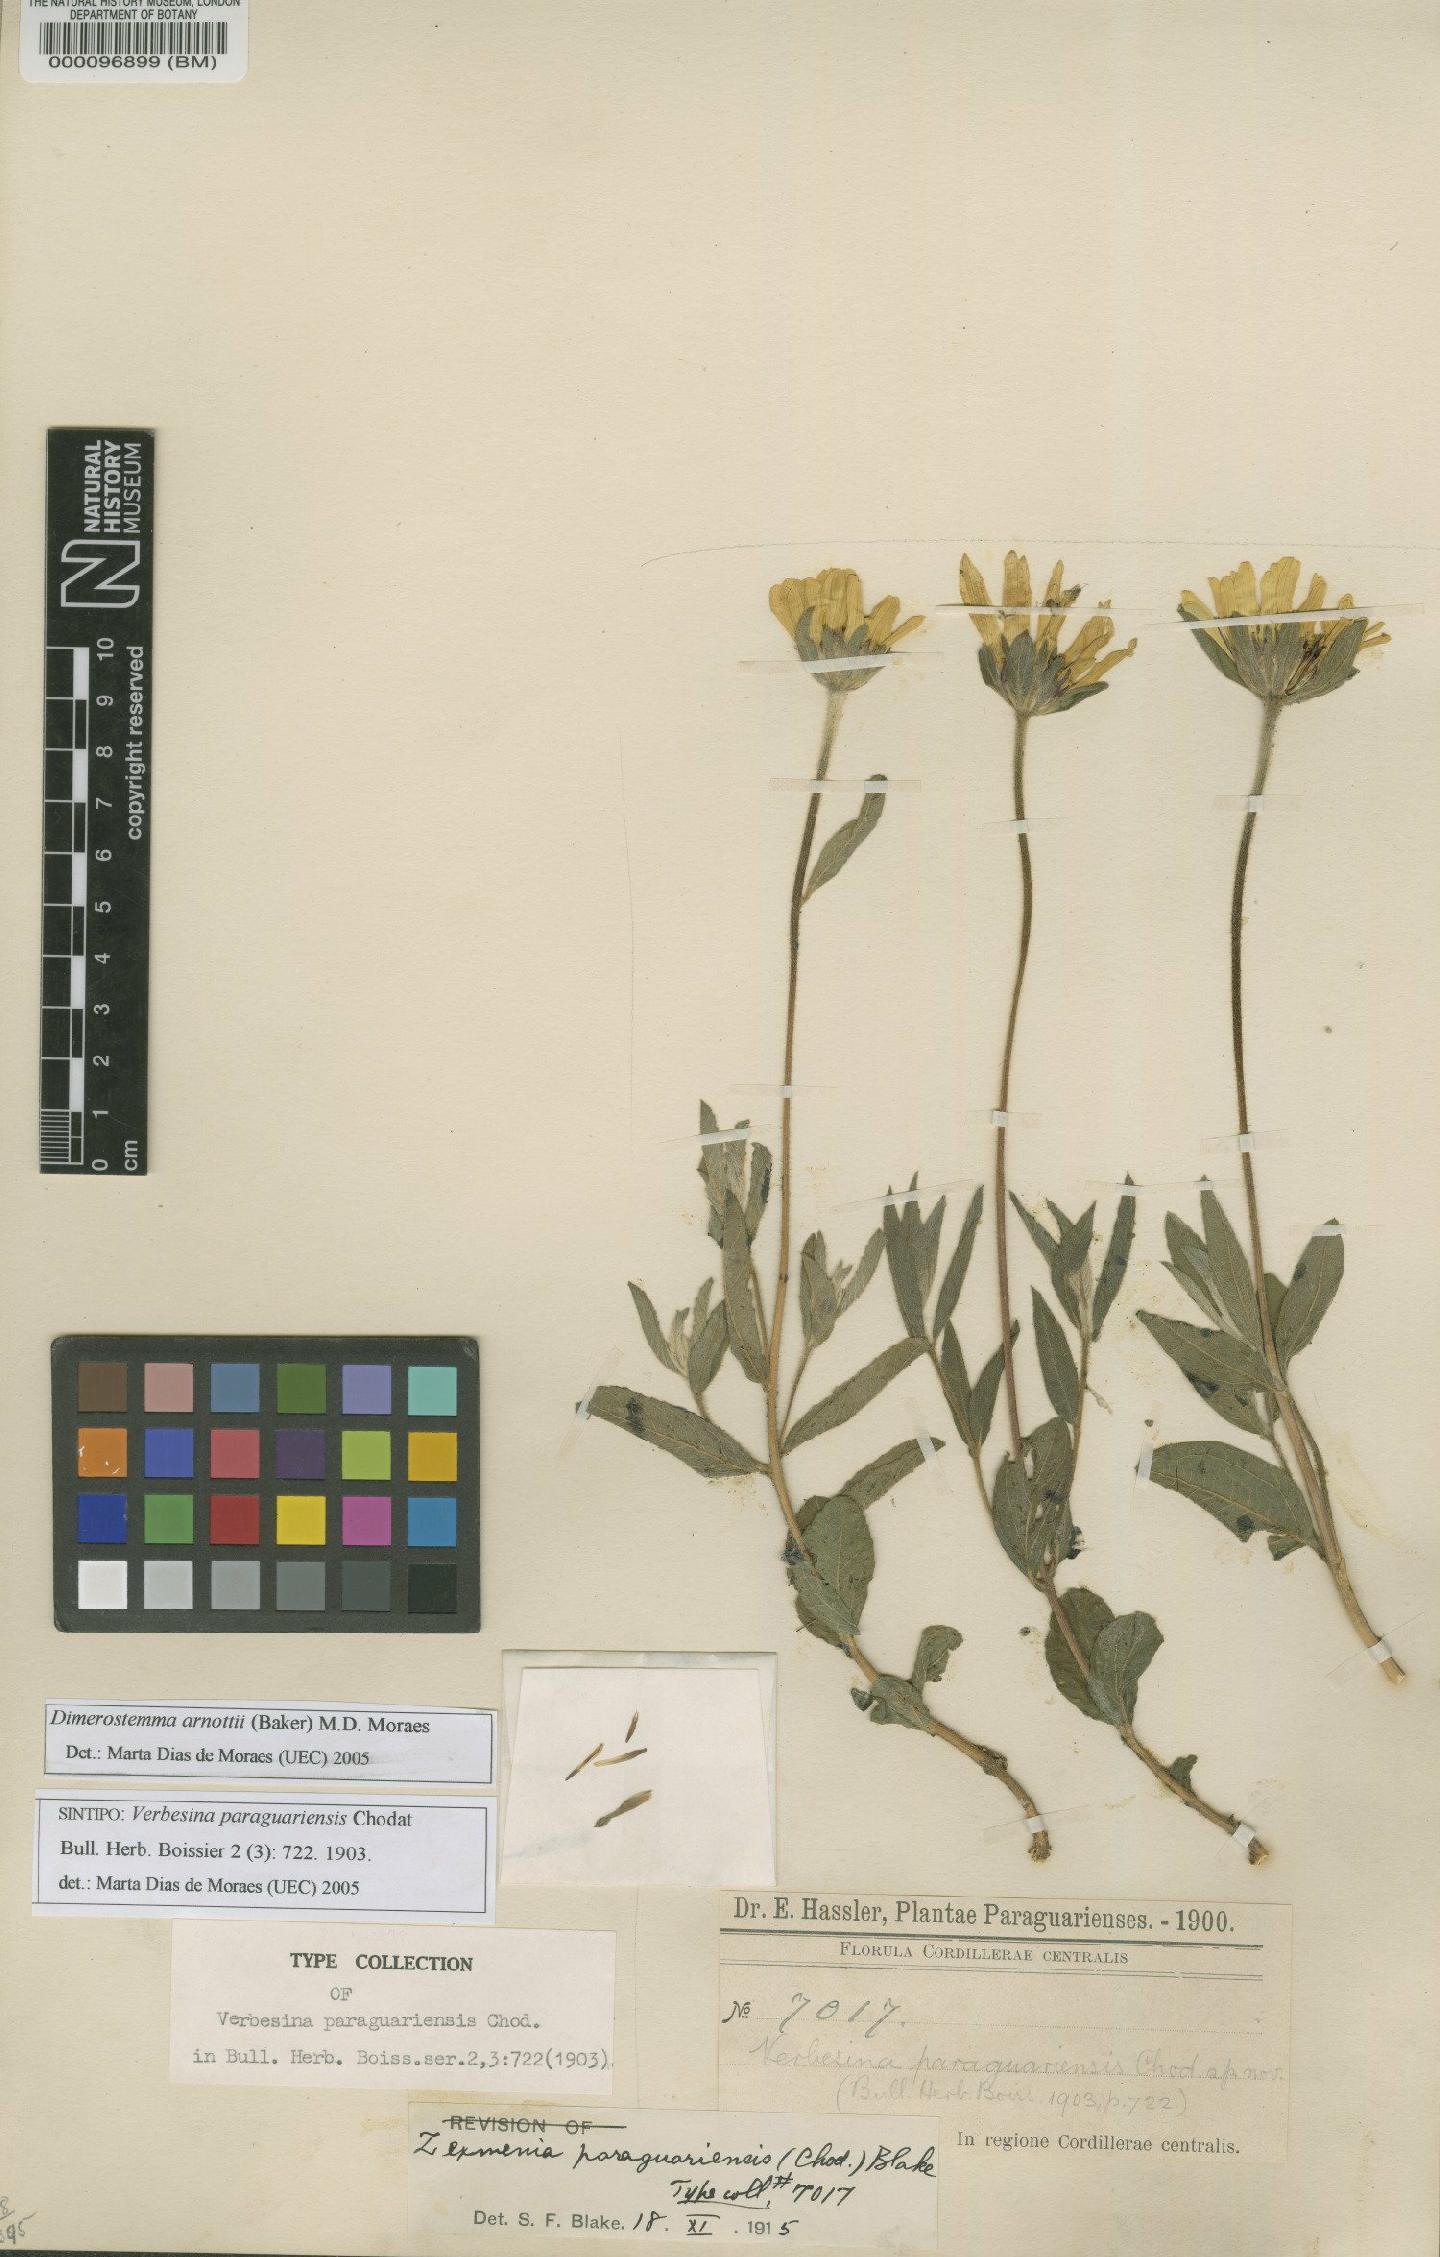 To NHMUK collection (Dimerostemma arnottii (Baker) M.D.Moraes; Syntype; NHMUK:ecatalogue:4567691)